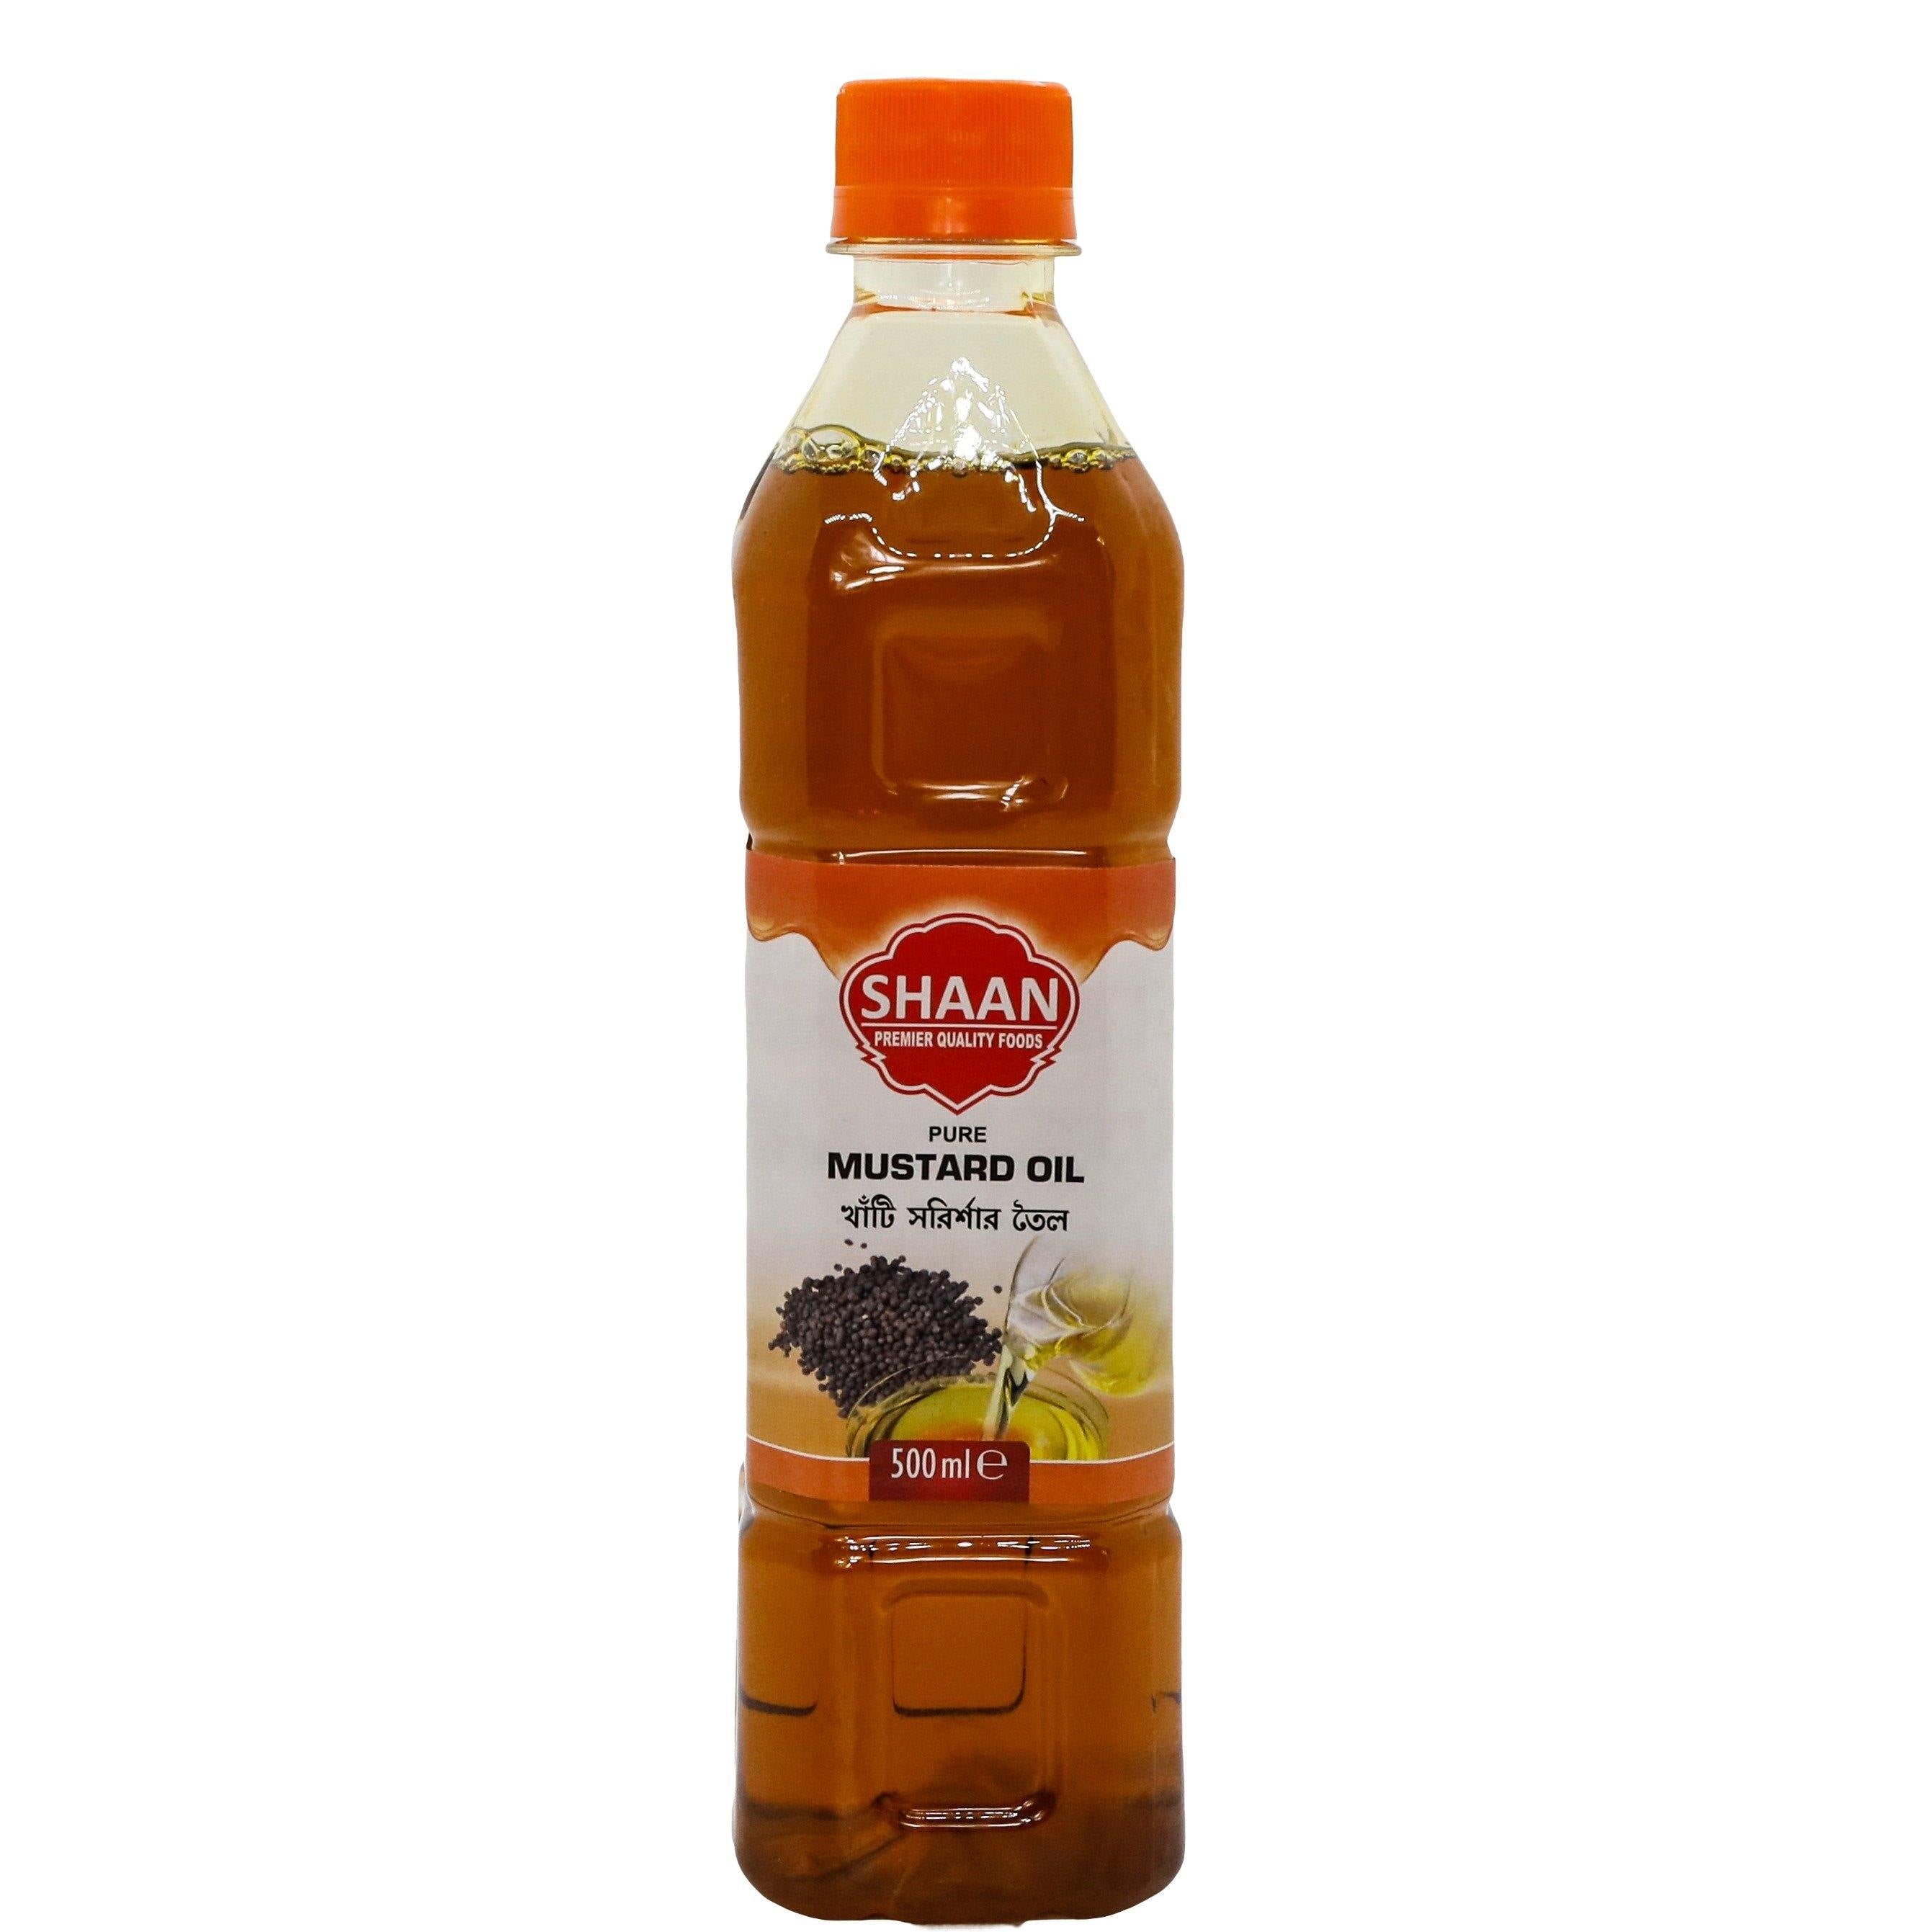 Shaan Mustard Oil 500ml @ SaveCo Online Ltd